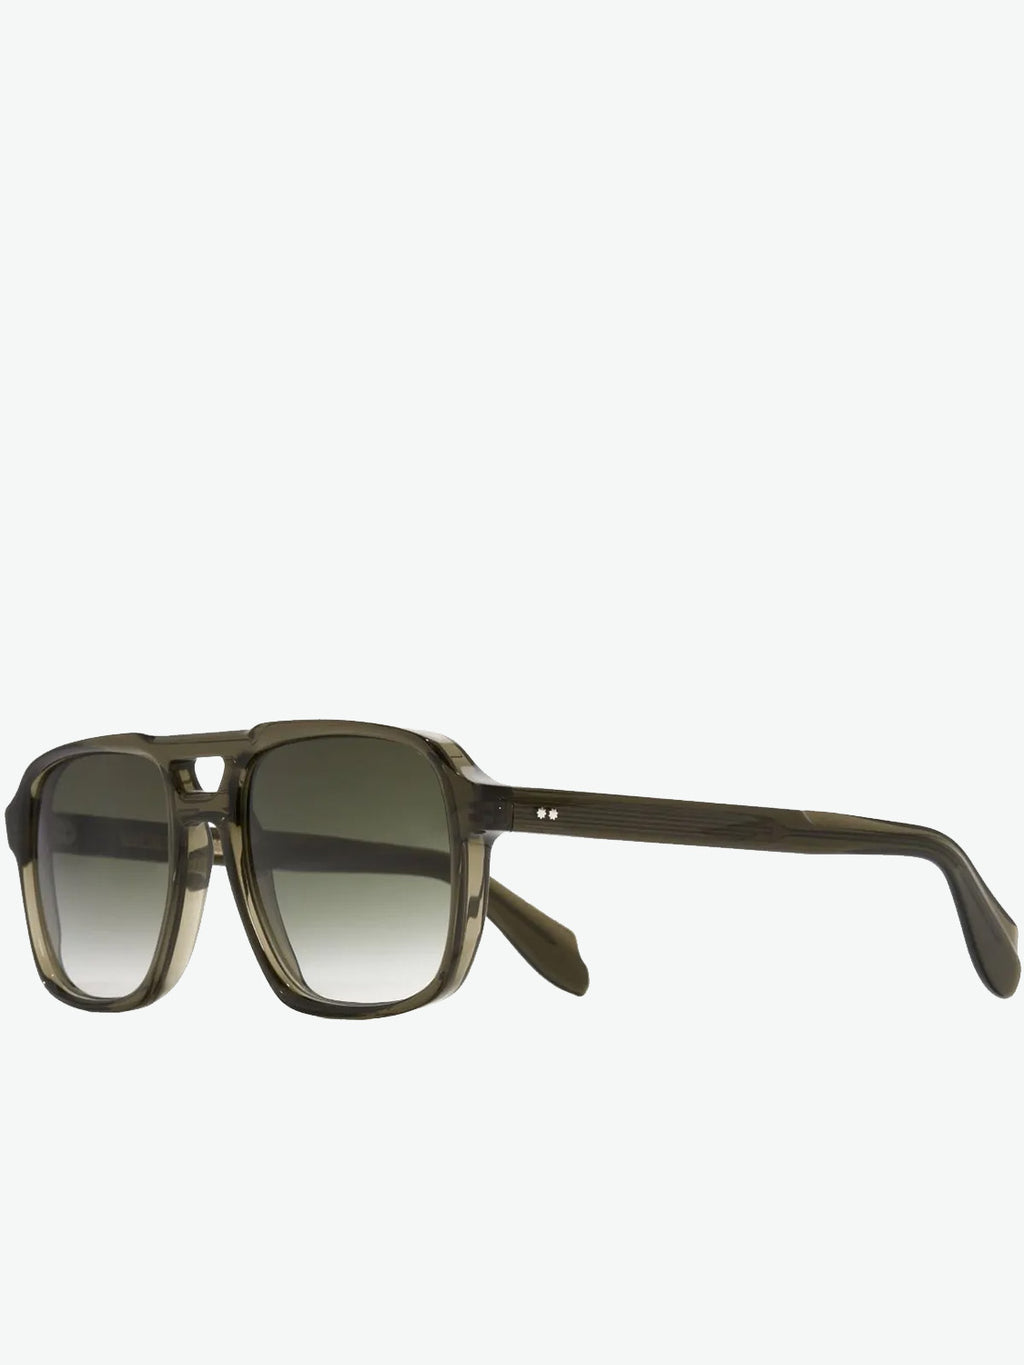 Cutler and Gross Aviator Sunglasses Khaki